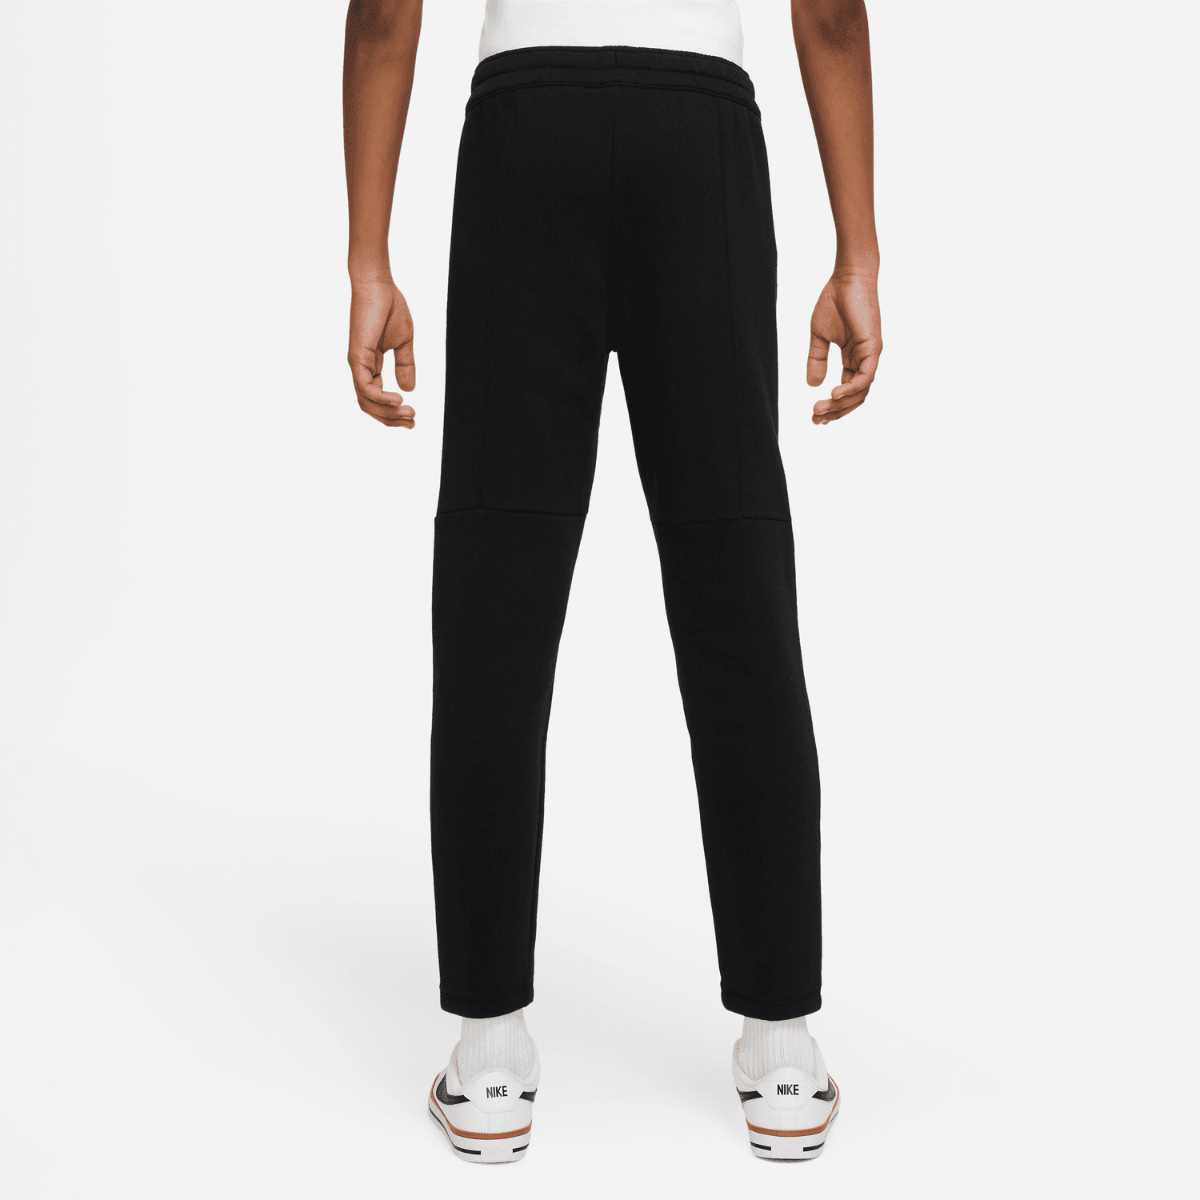 Nike Sportswear Amplify Pants Junior - Black/White